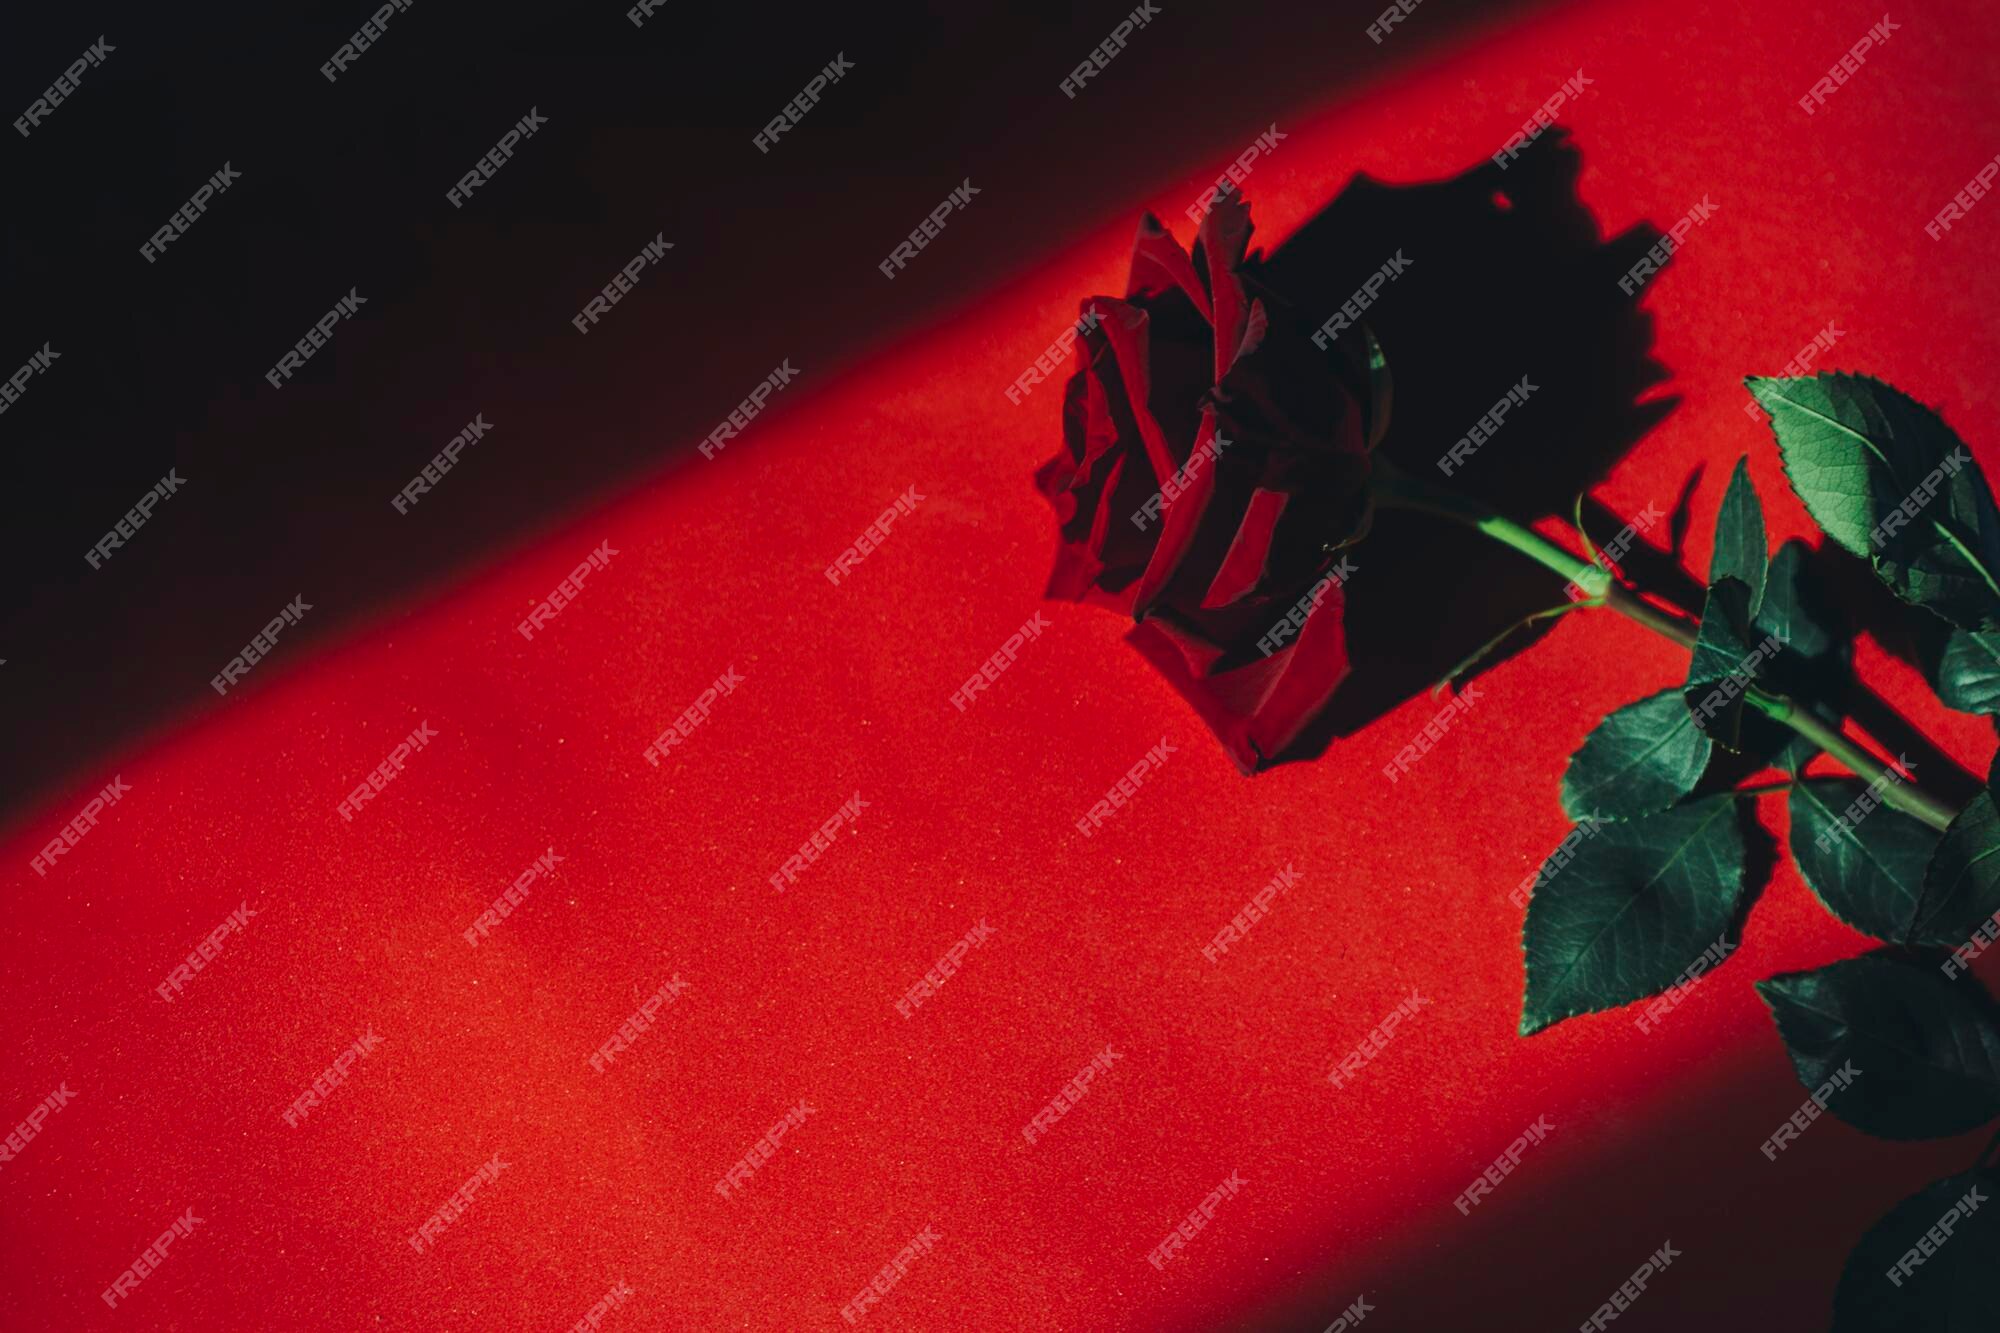 Dark Red Roses Images - Free Download on Freepik